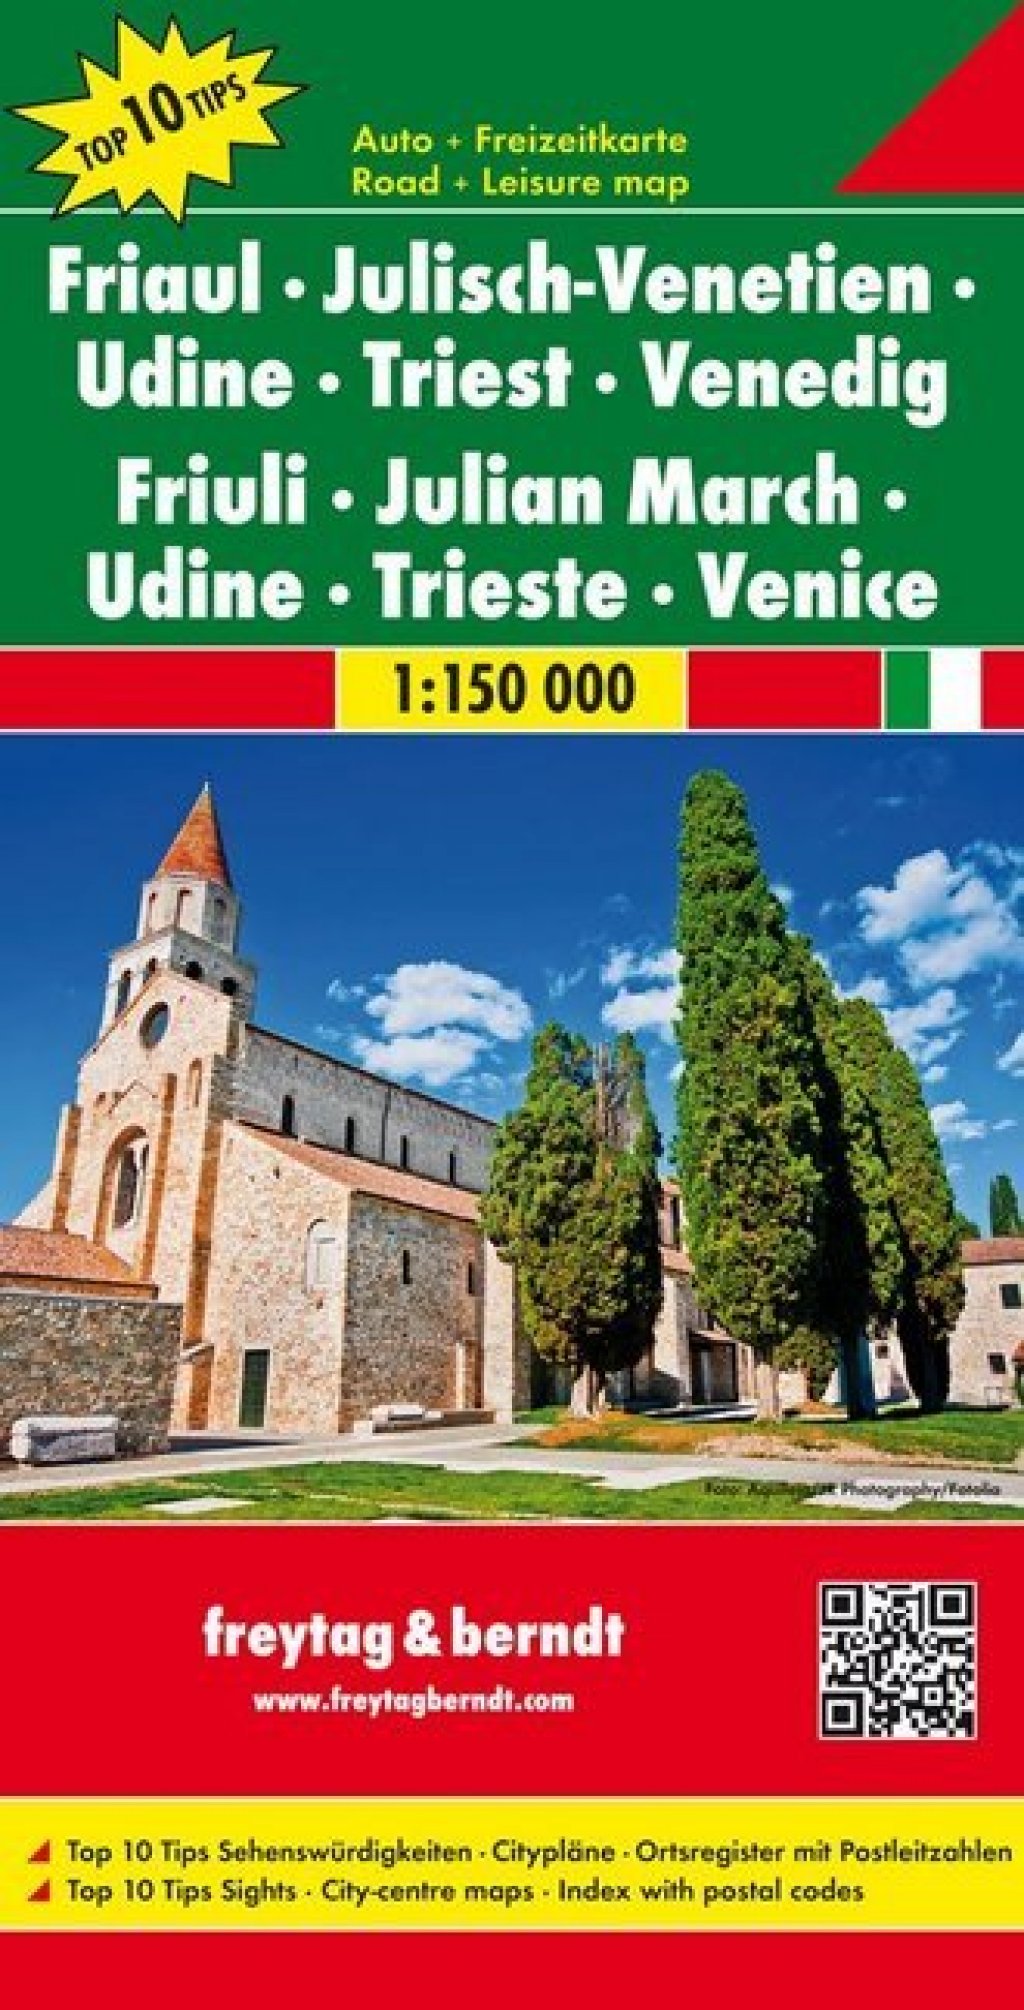 Karte Freytag & Berndt Auto + Freizeitkarte Friaul - Julisch-Venetien - Udine - Triest - Venedig, Top 10 Tips, Autokarte 1:150.000.    Friulia, Julian March, Udine, Triest, Venice